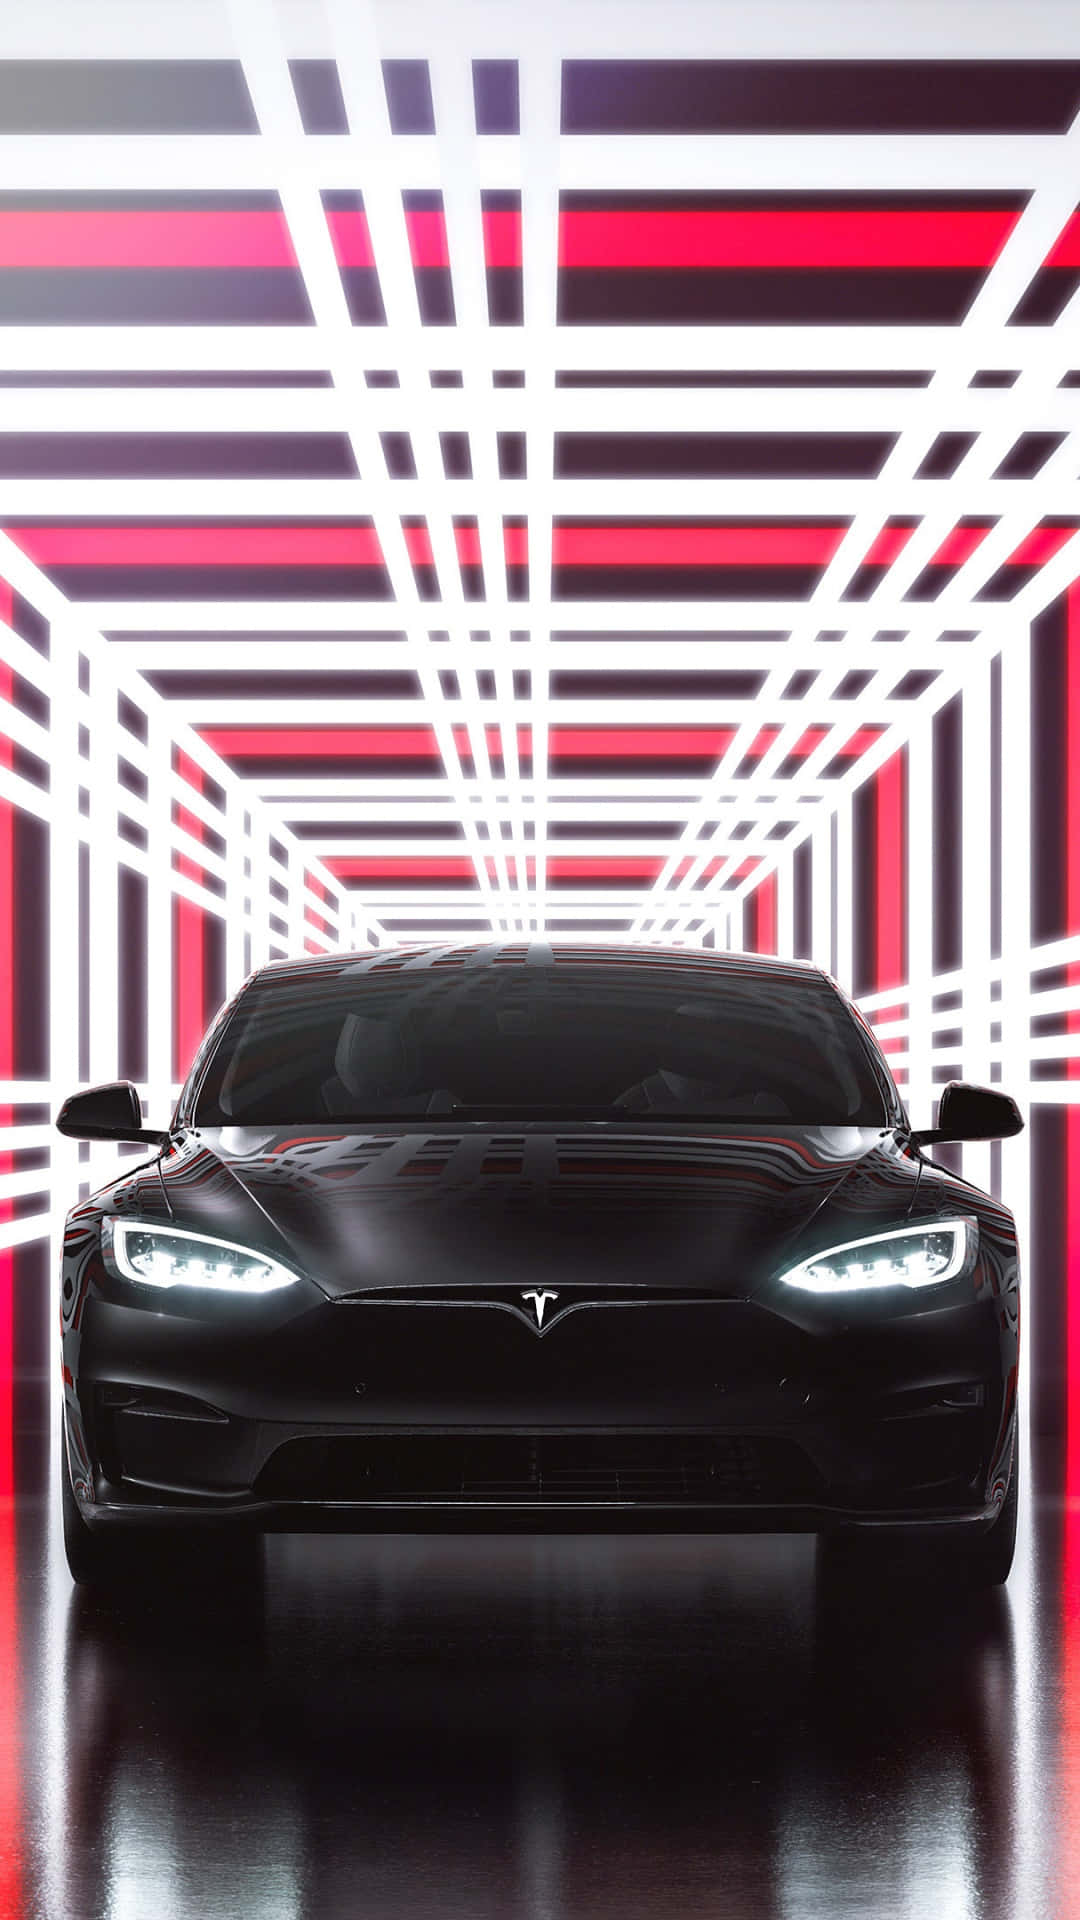 Charging Ahead with Tesla